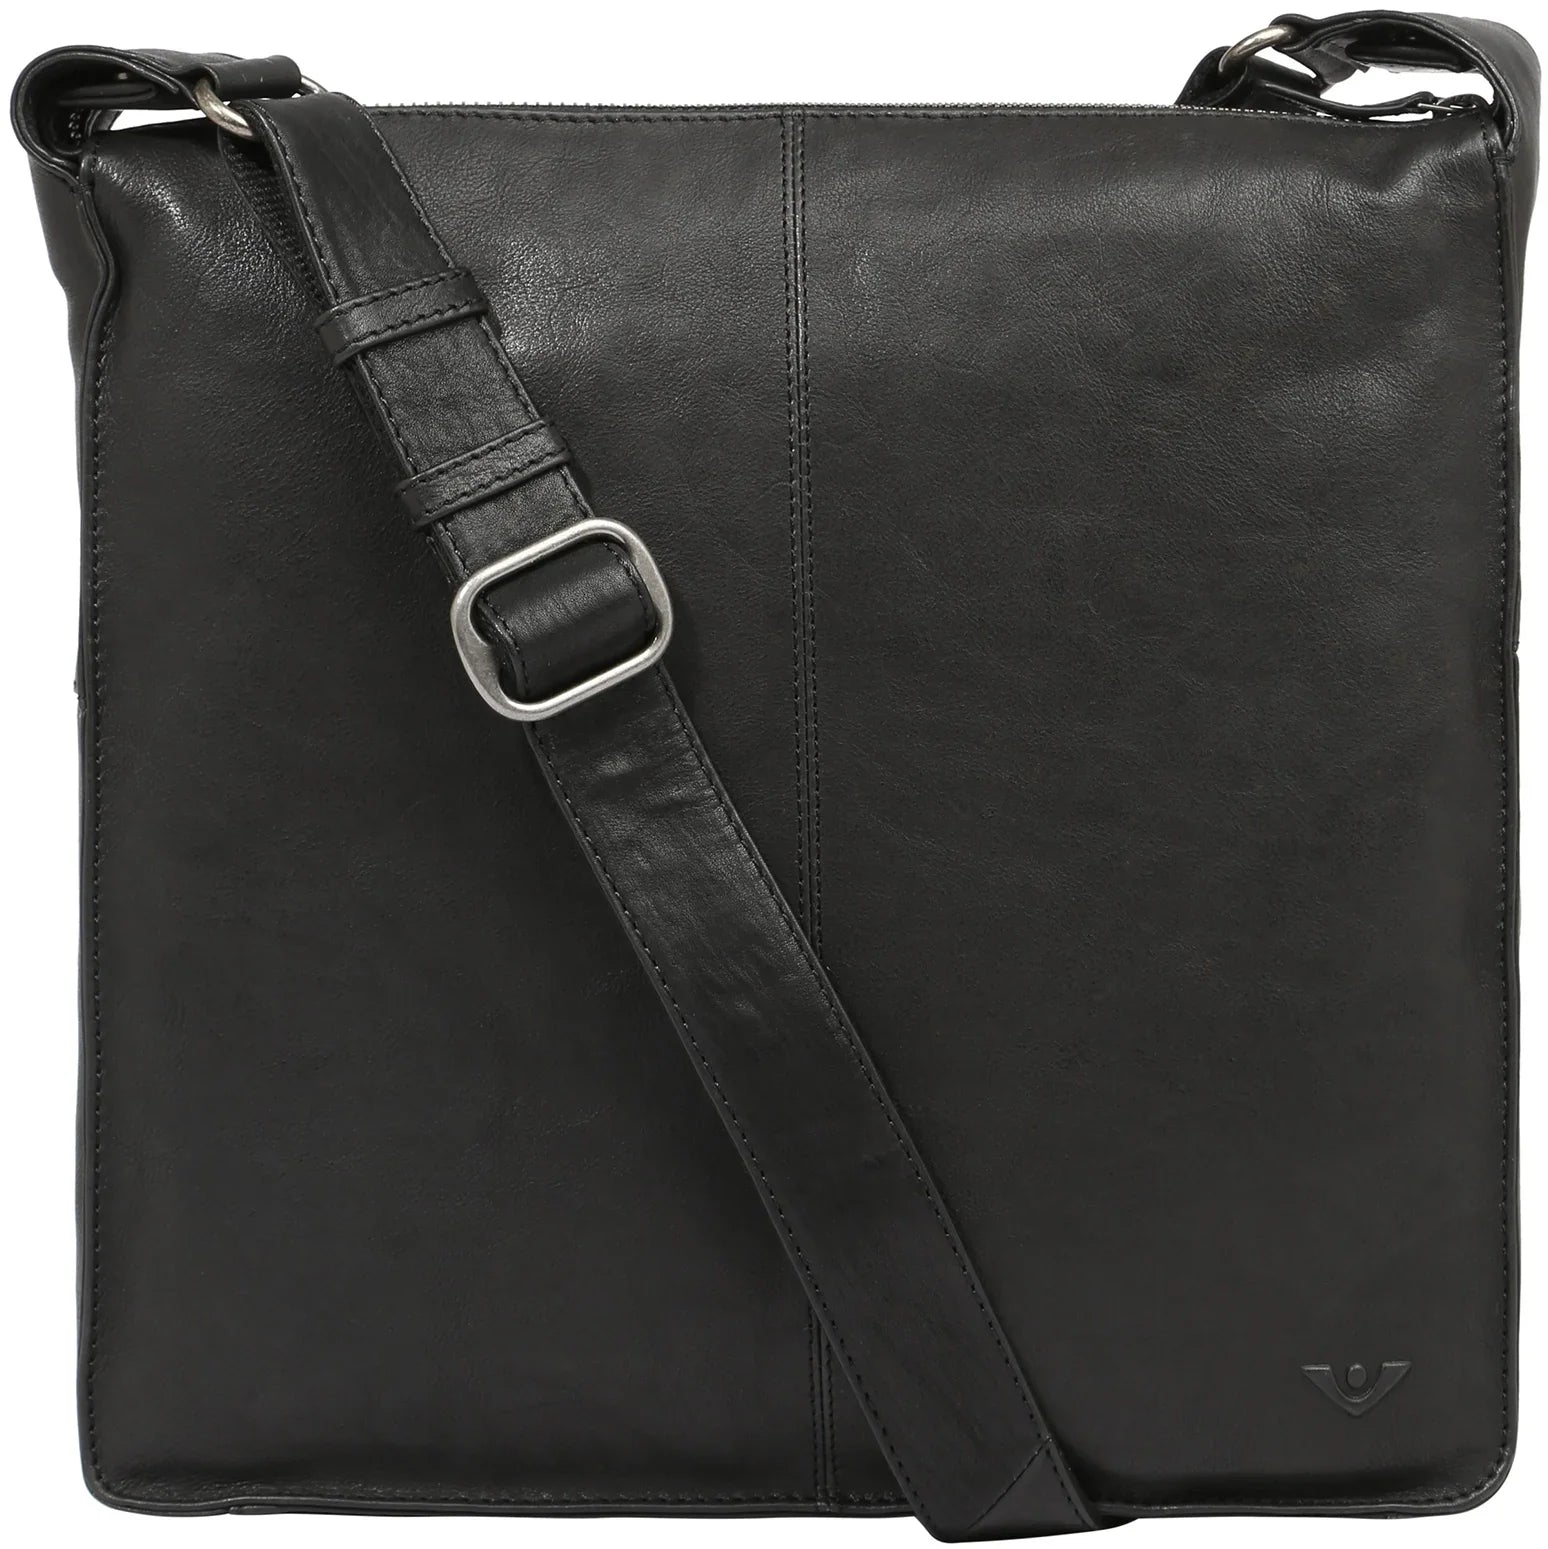 VOi-Design Dakota Lola shoulder bag 29 cm - Black